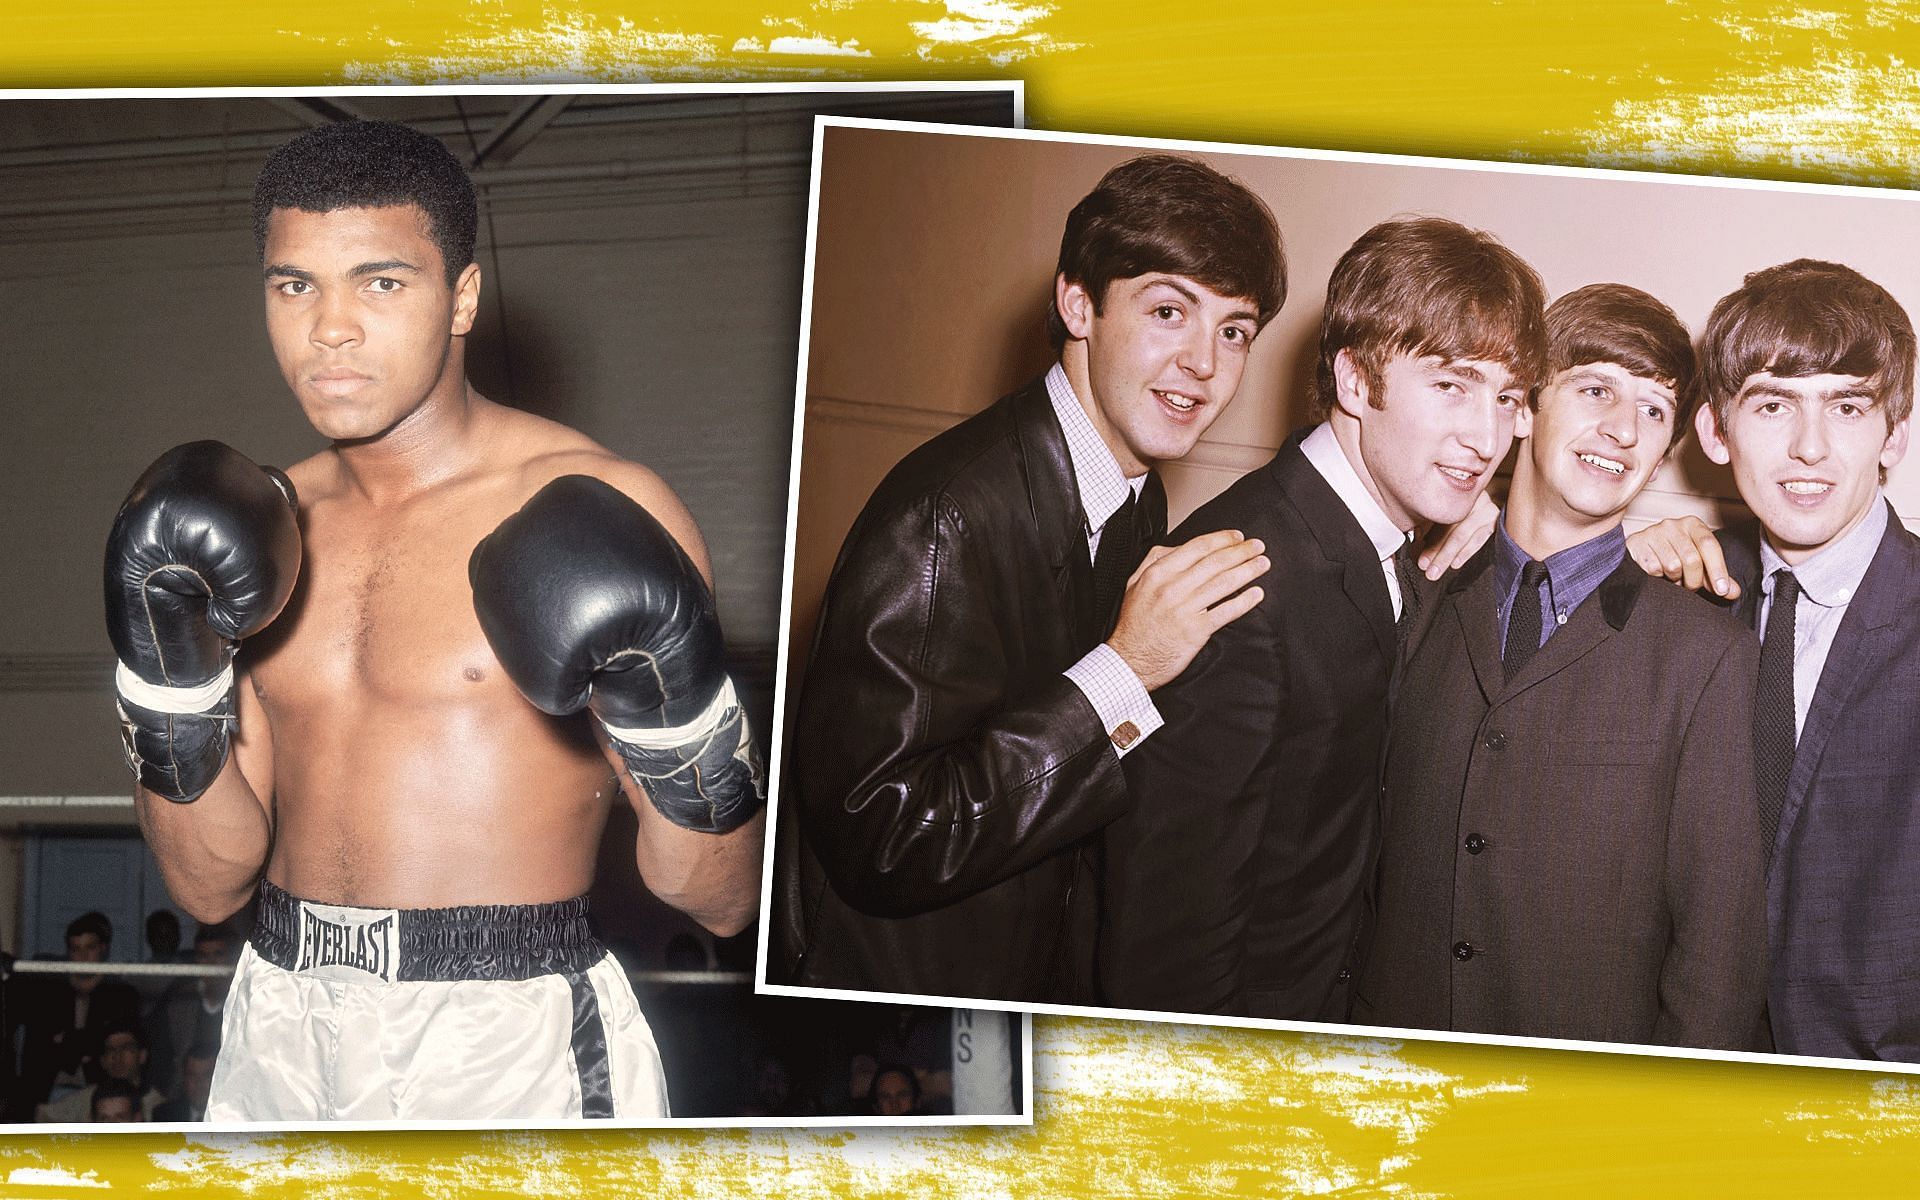 Muhammad Ali (left) &amp; The Beatles (right) [Image Credits- People.com &amp; RollingStone.com]